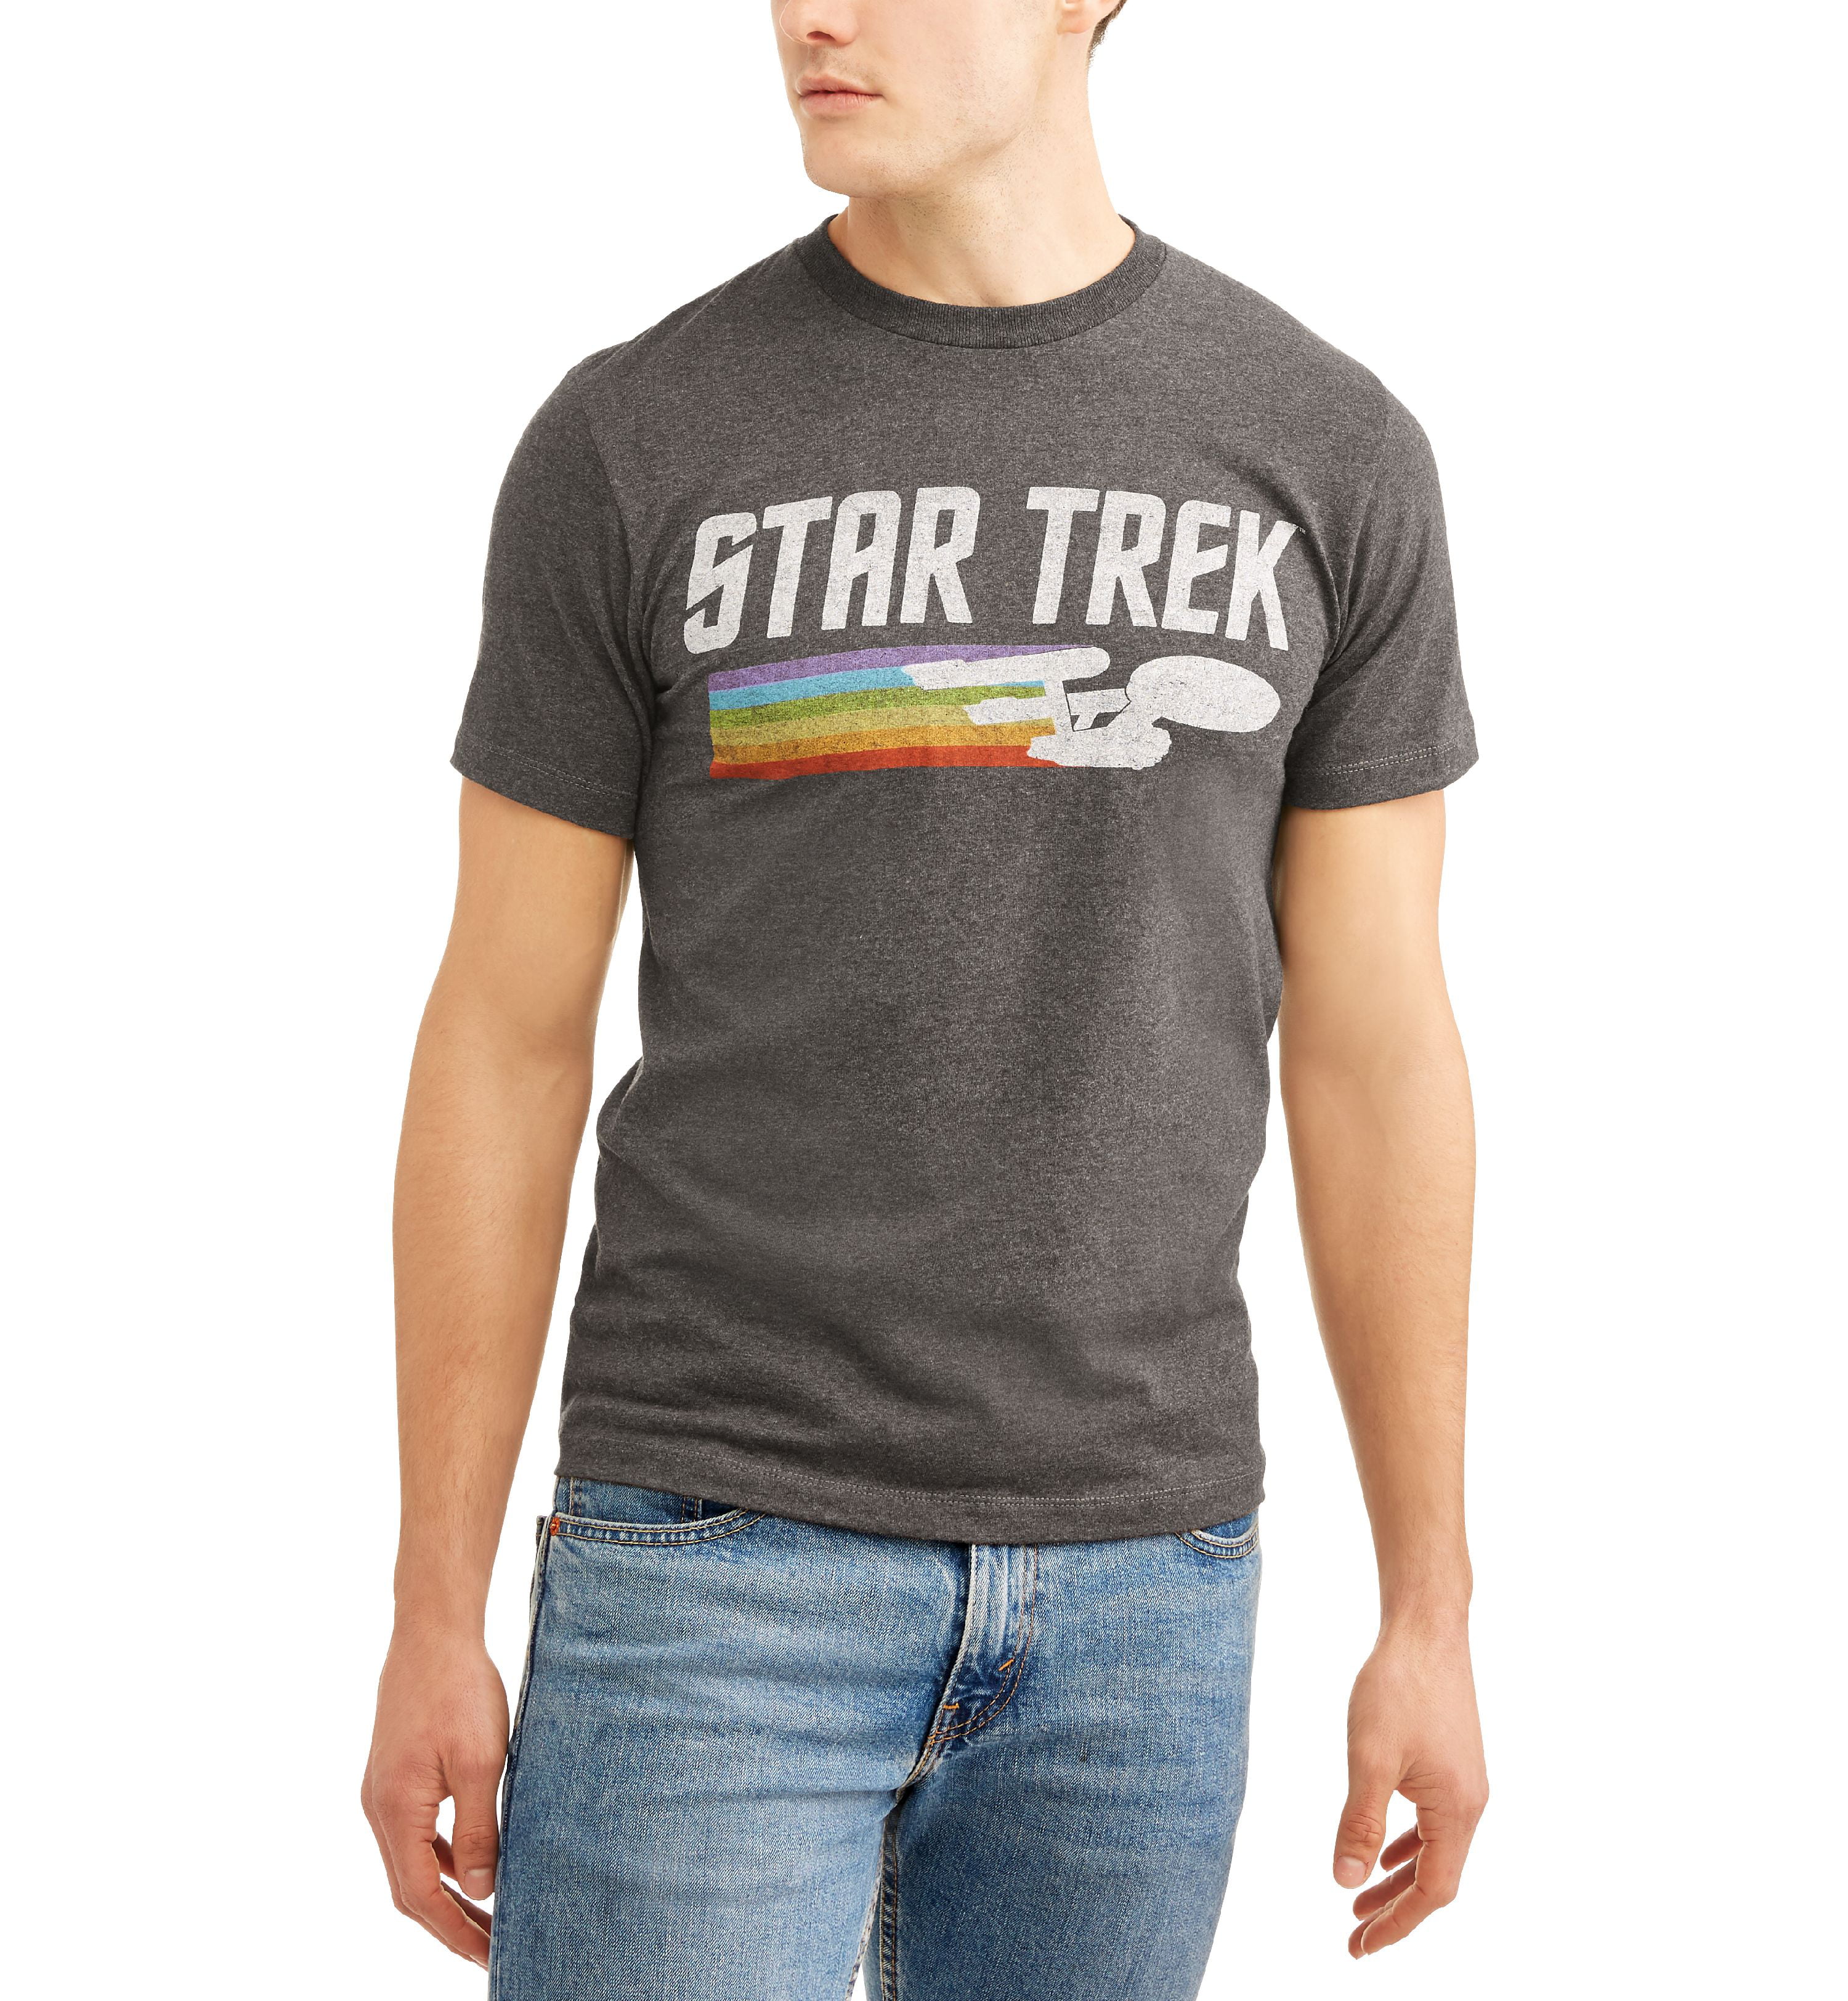 Star Trek Short Sleeve T-Shirt Casual 3D Printed T-Shirt Unisex Adult Tee Tops